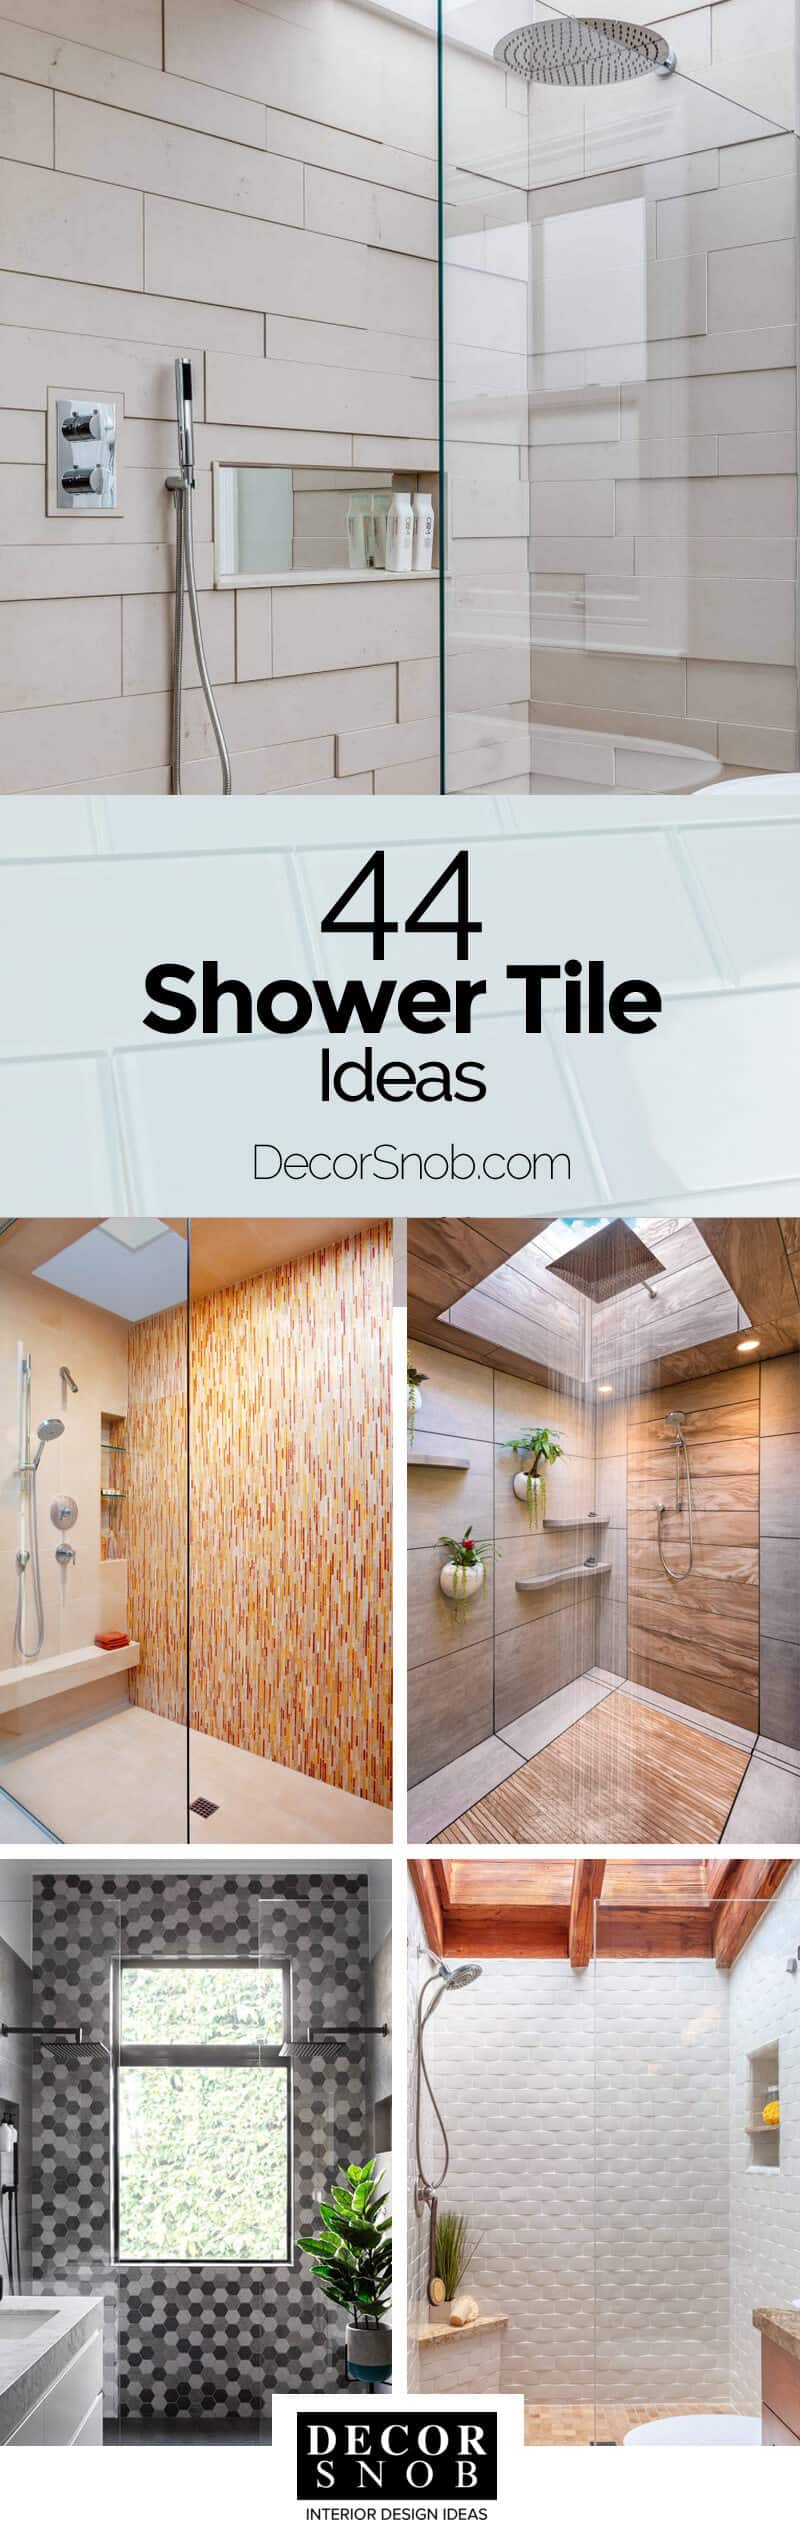 44 Modern Shower Tile Ideas And Designs, Shower Surround Ideas Tile